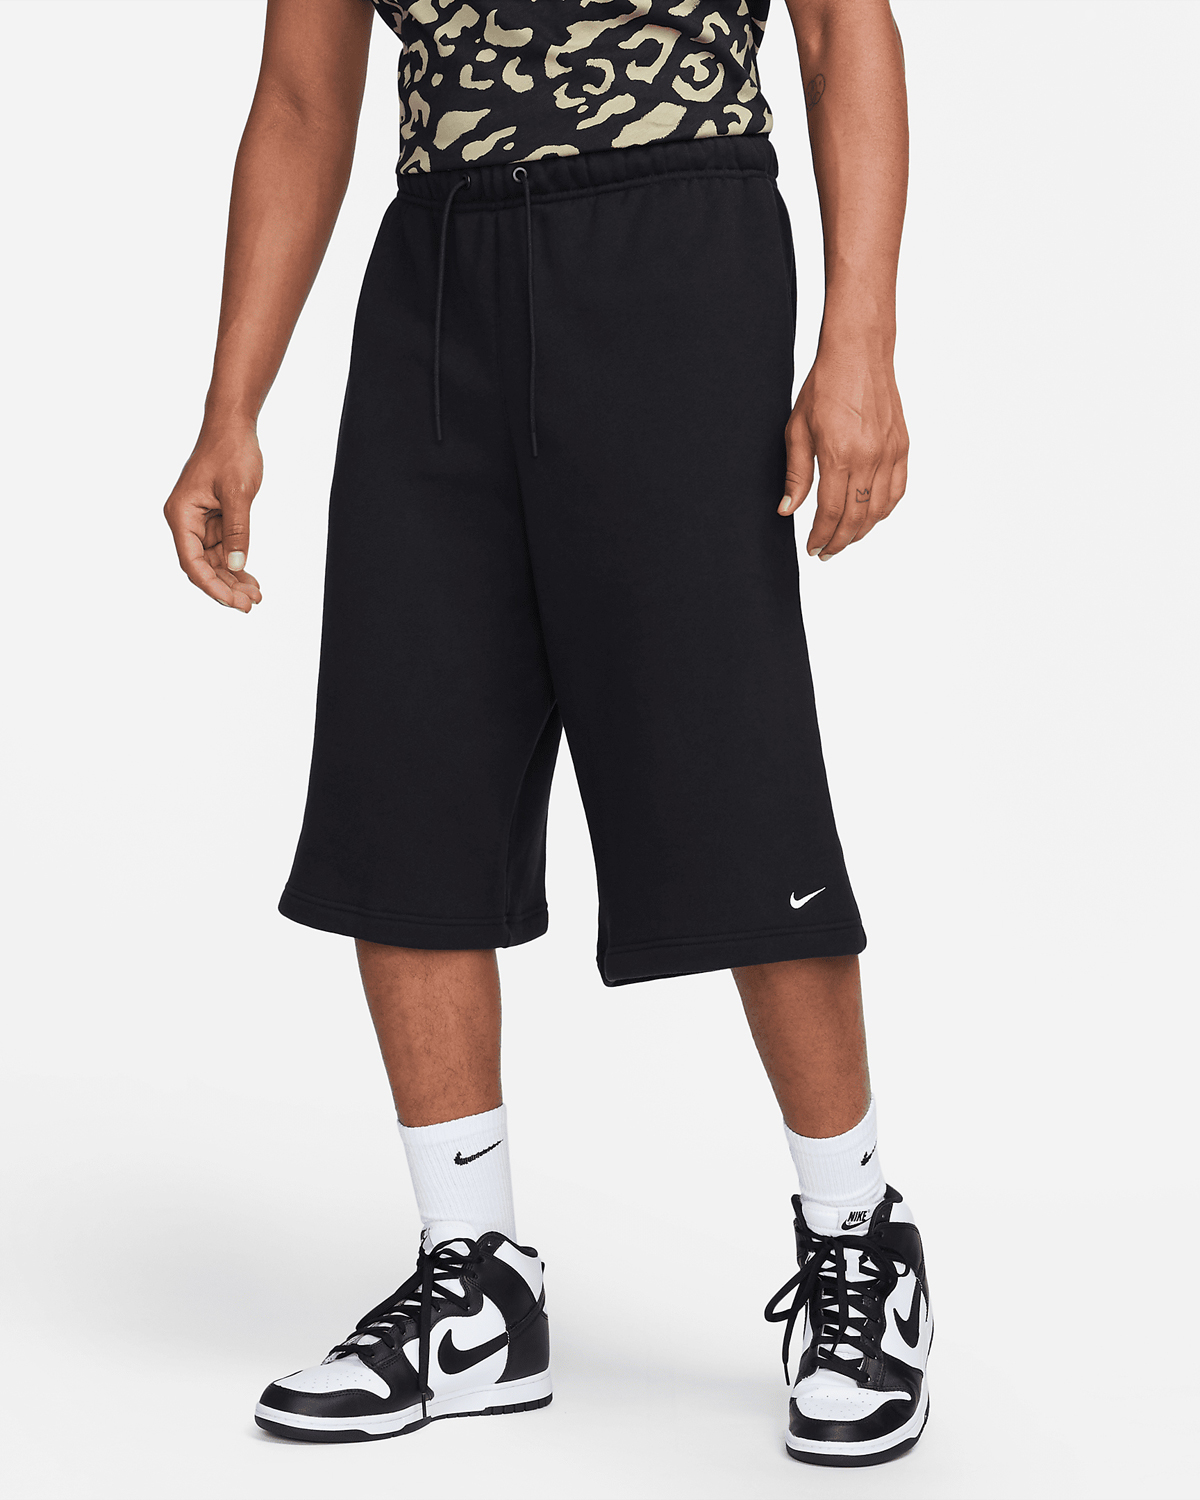 Nike-Sportswear-Circa-Shorts-Black-White